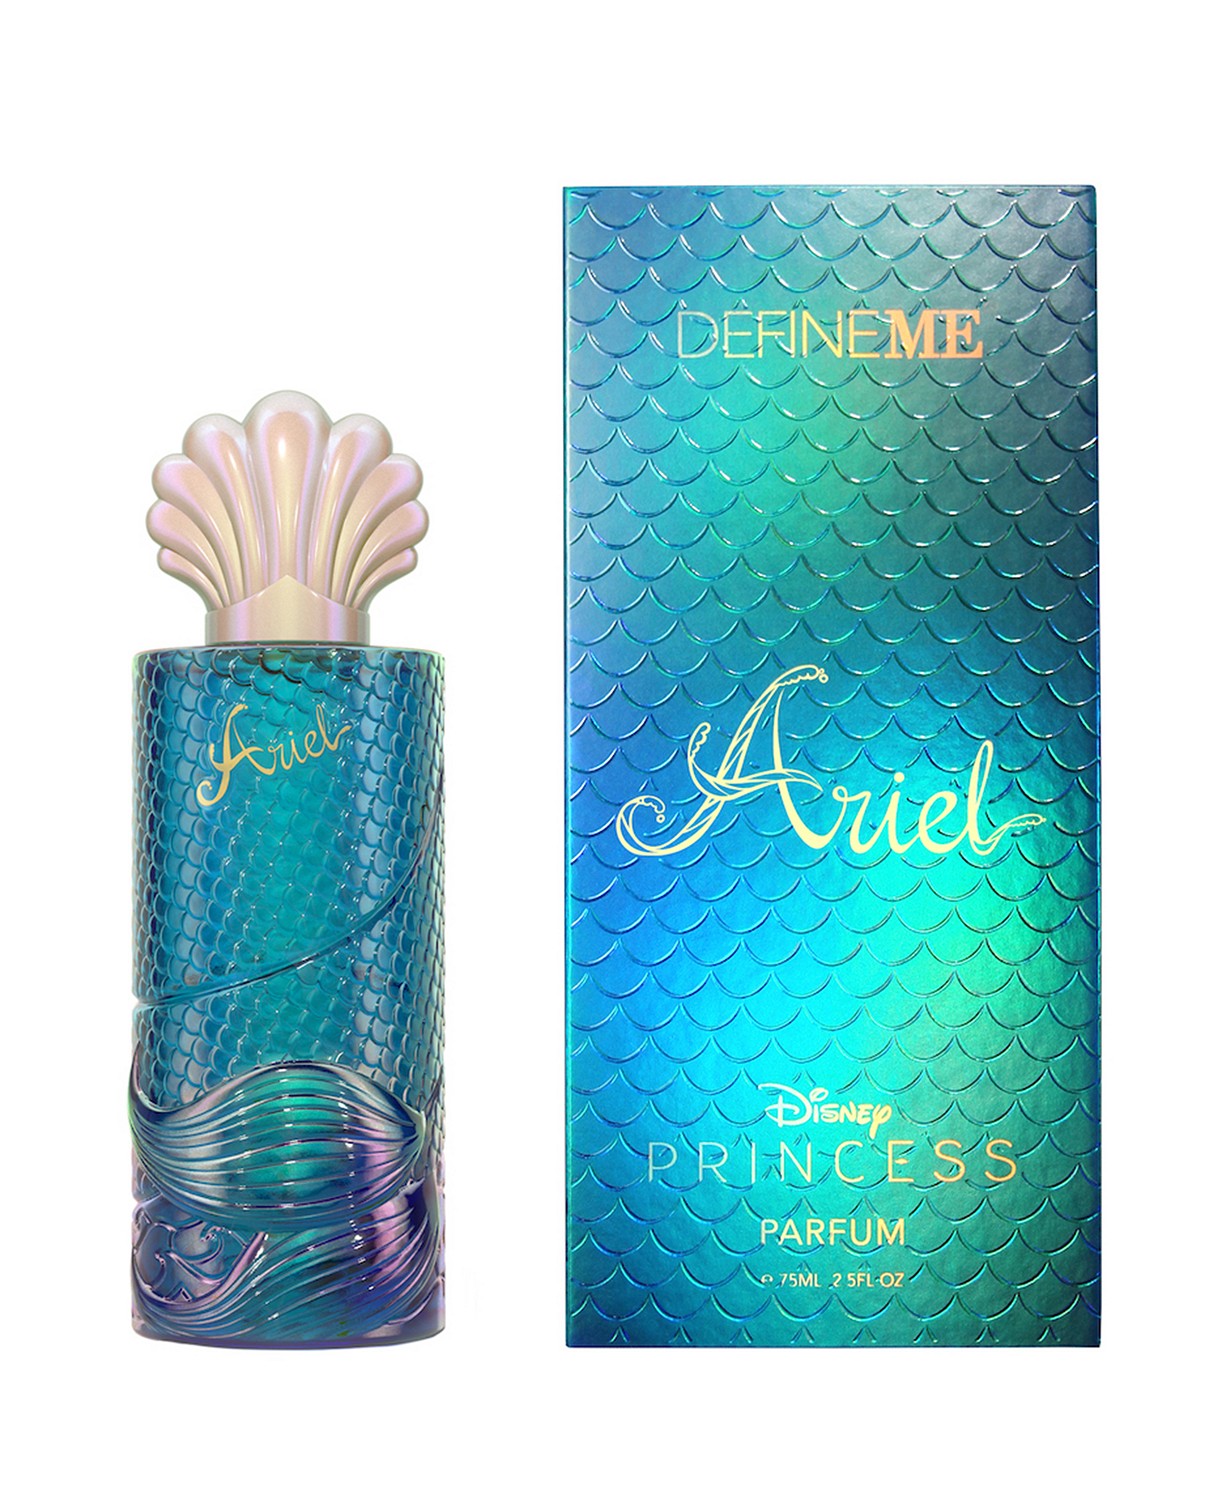 Ariel Disney Princess Parfum DefineMe perfume a new